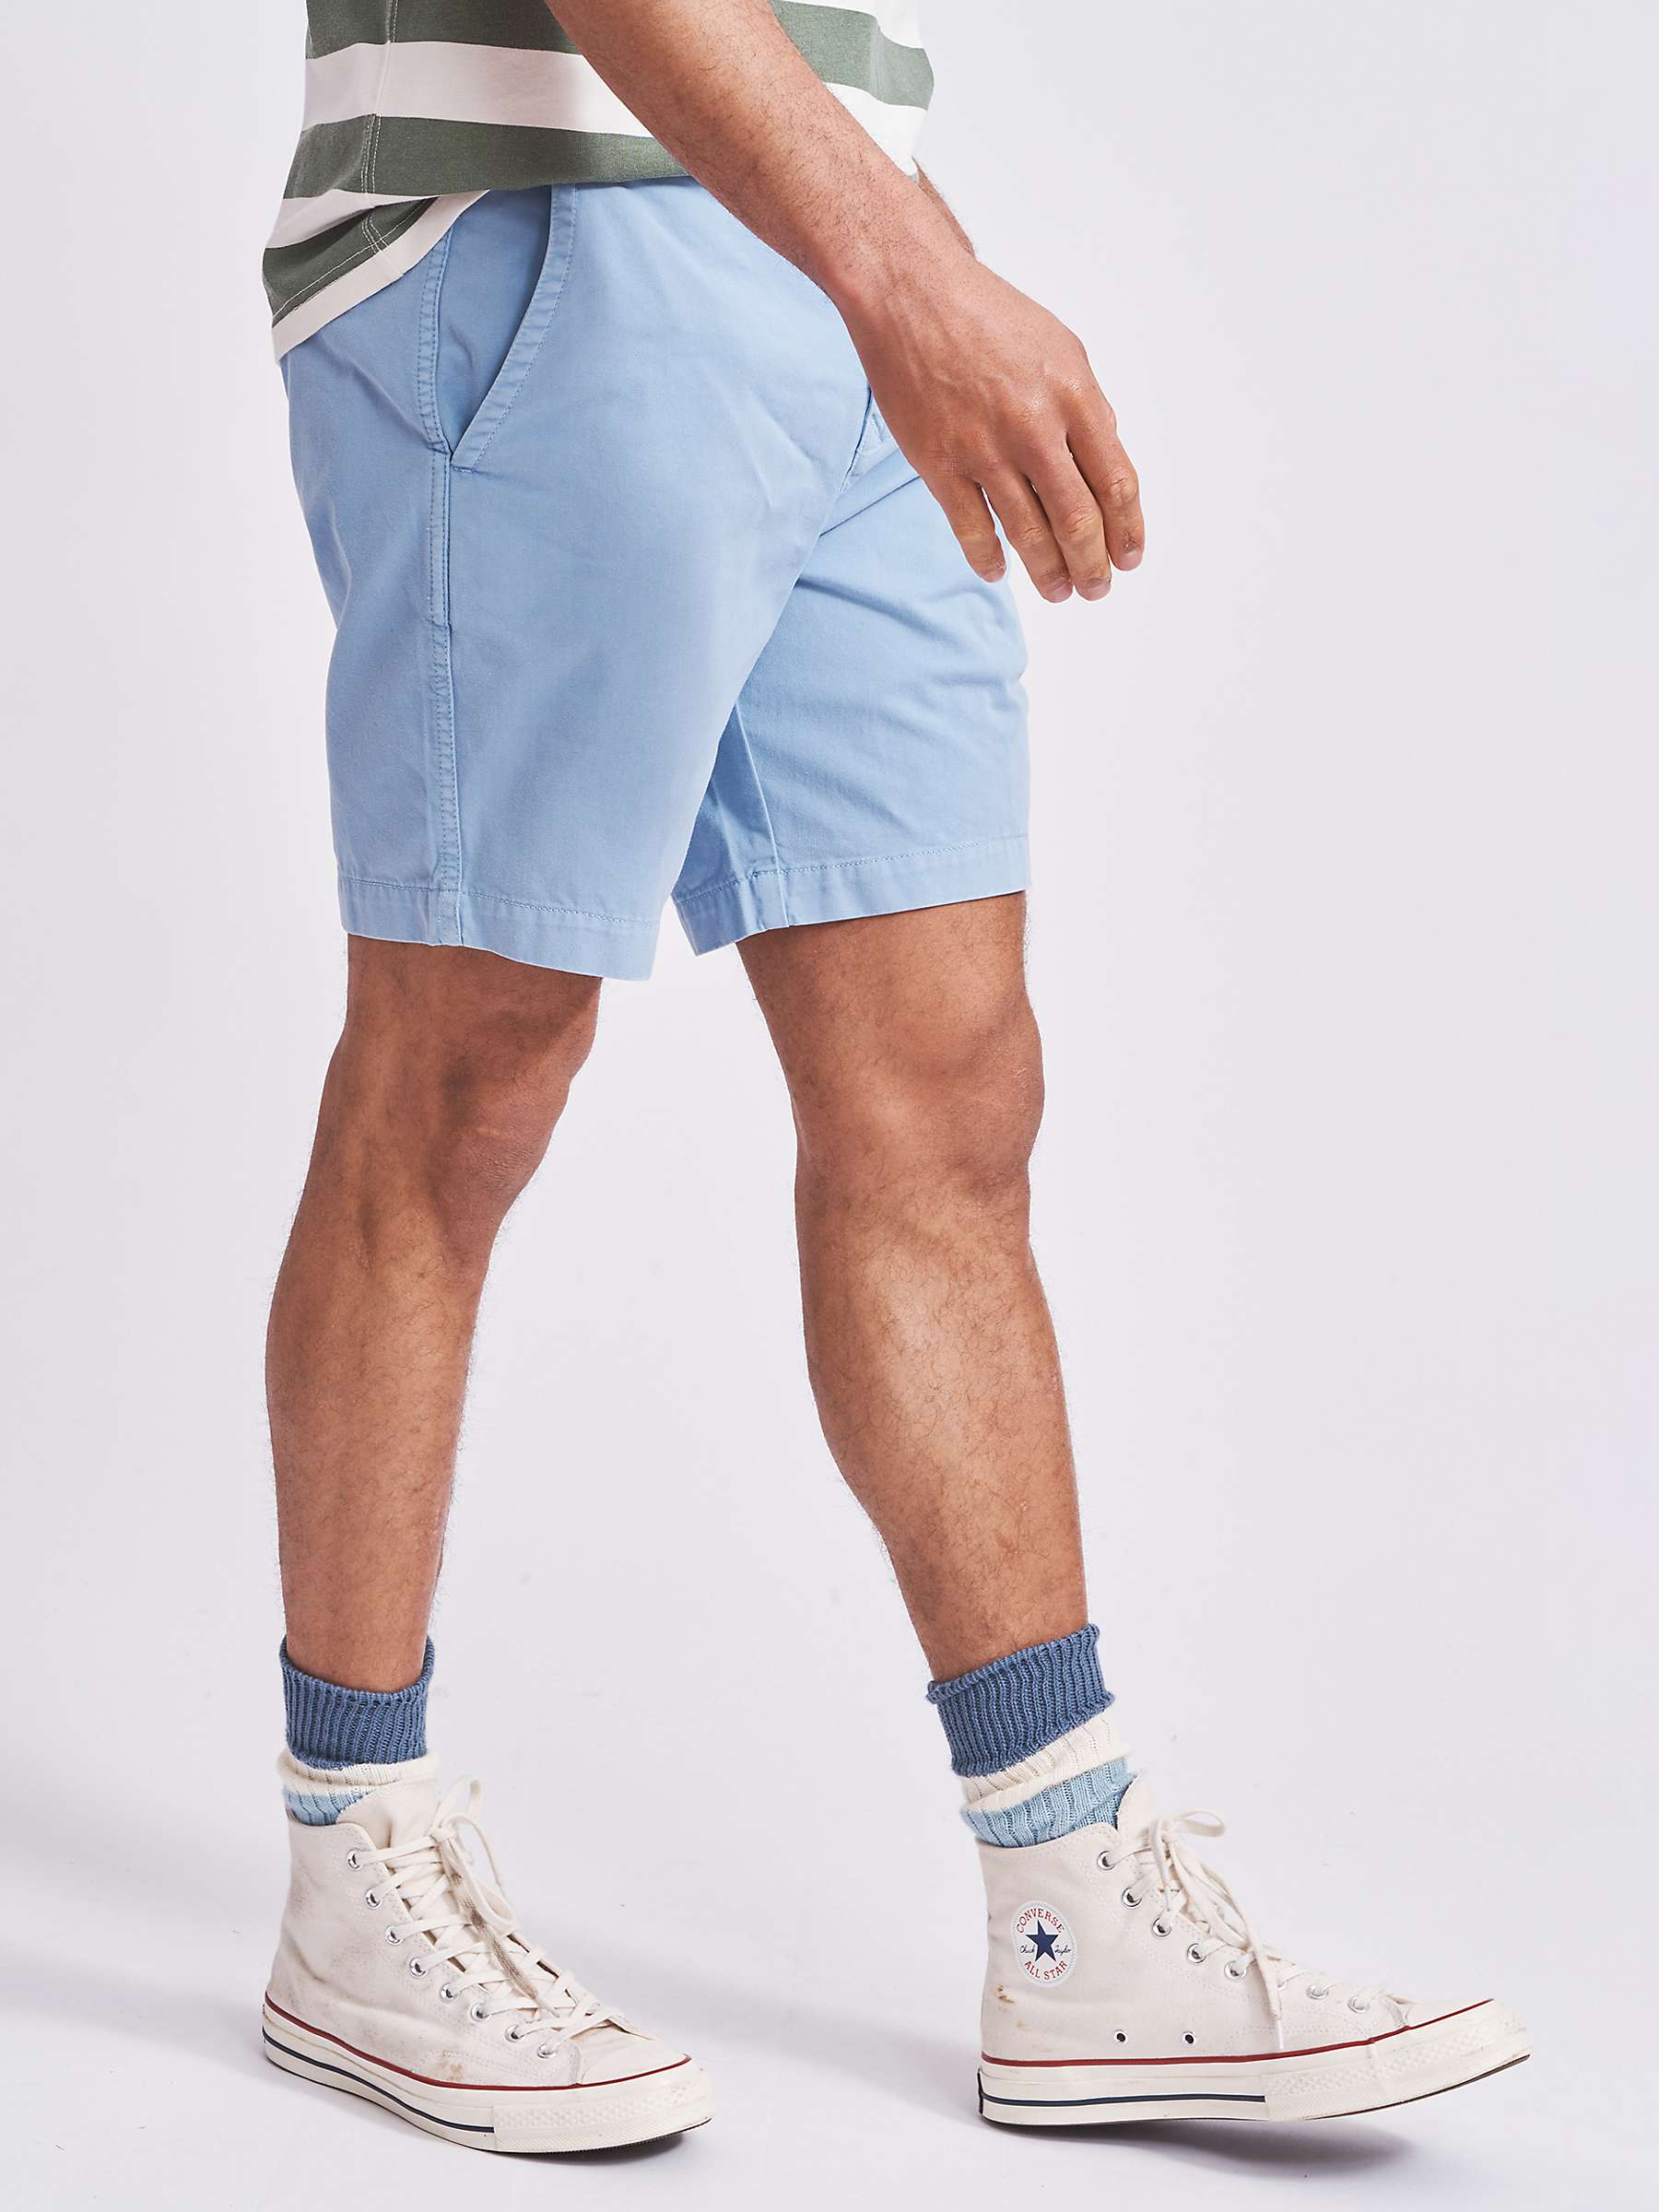 Buy Aubin Stamford Chino Shorts Online at johnlewis.com